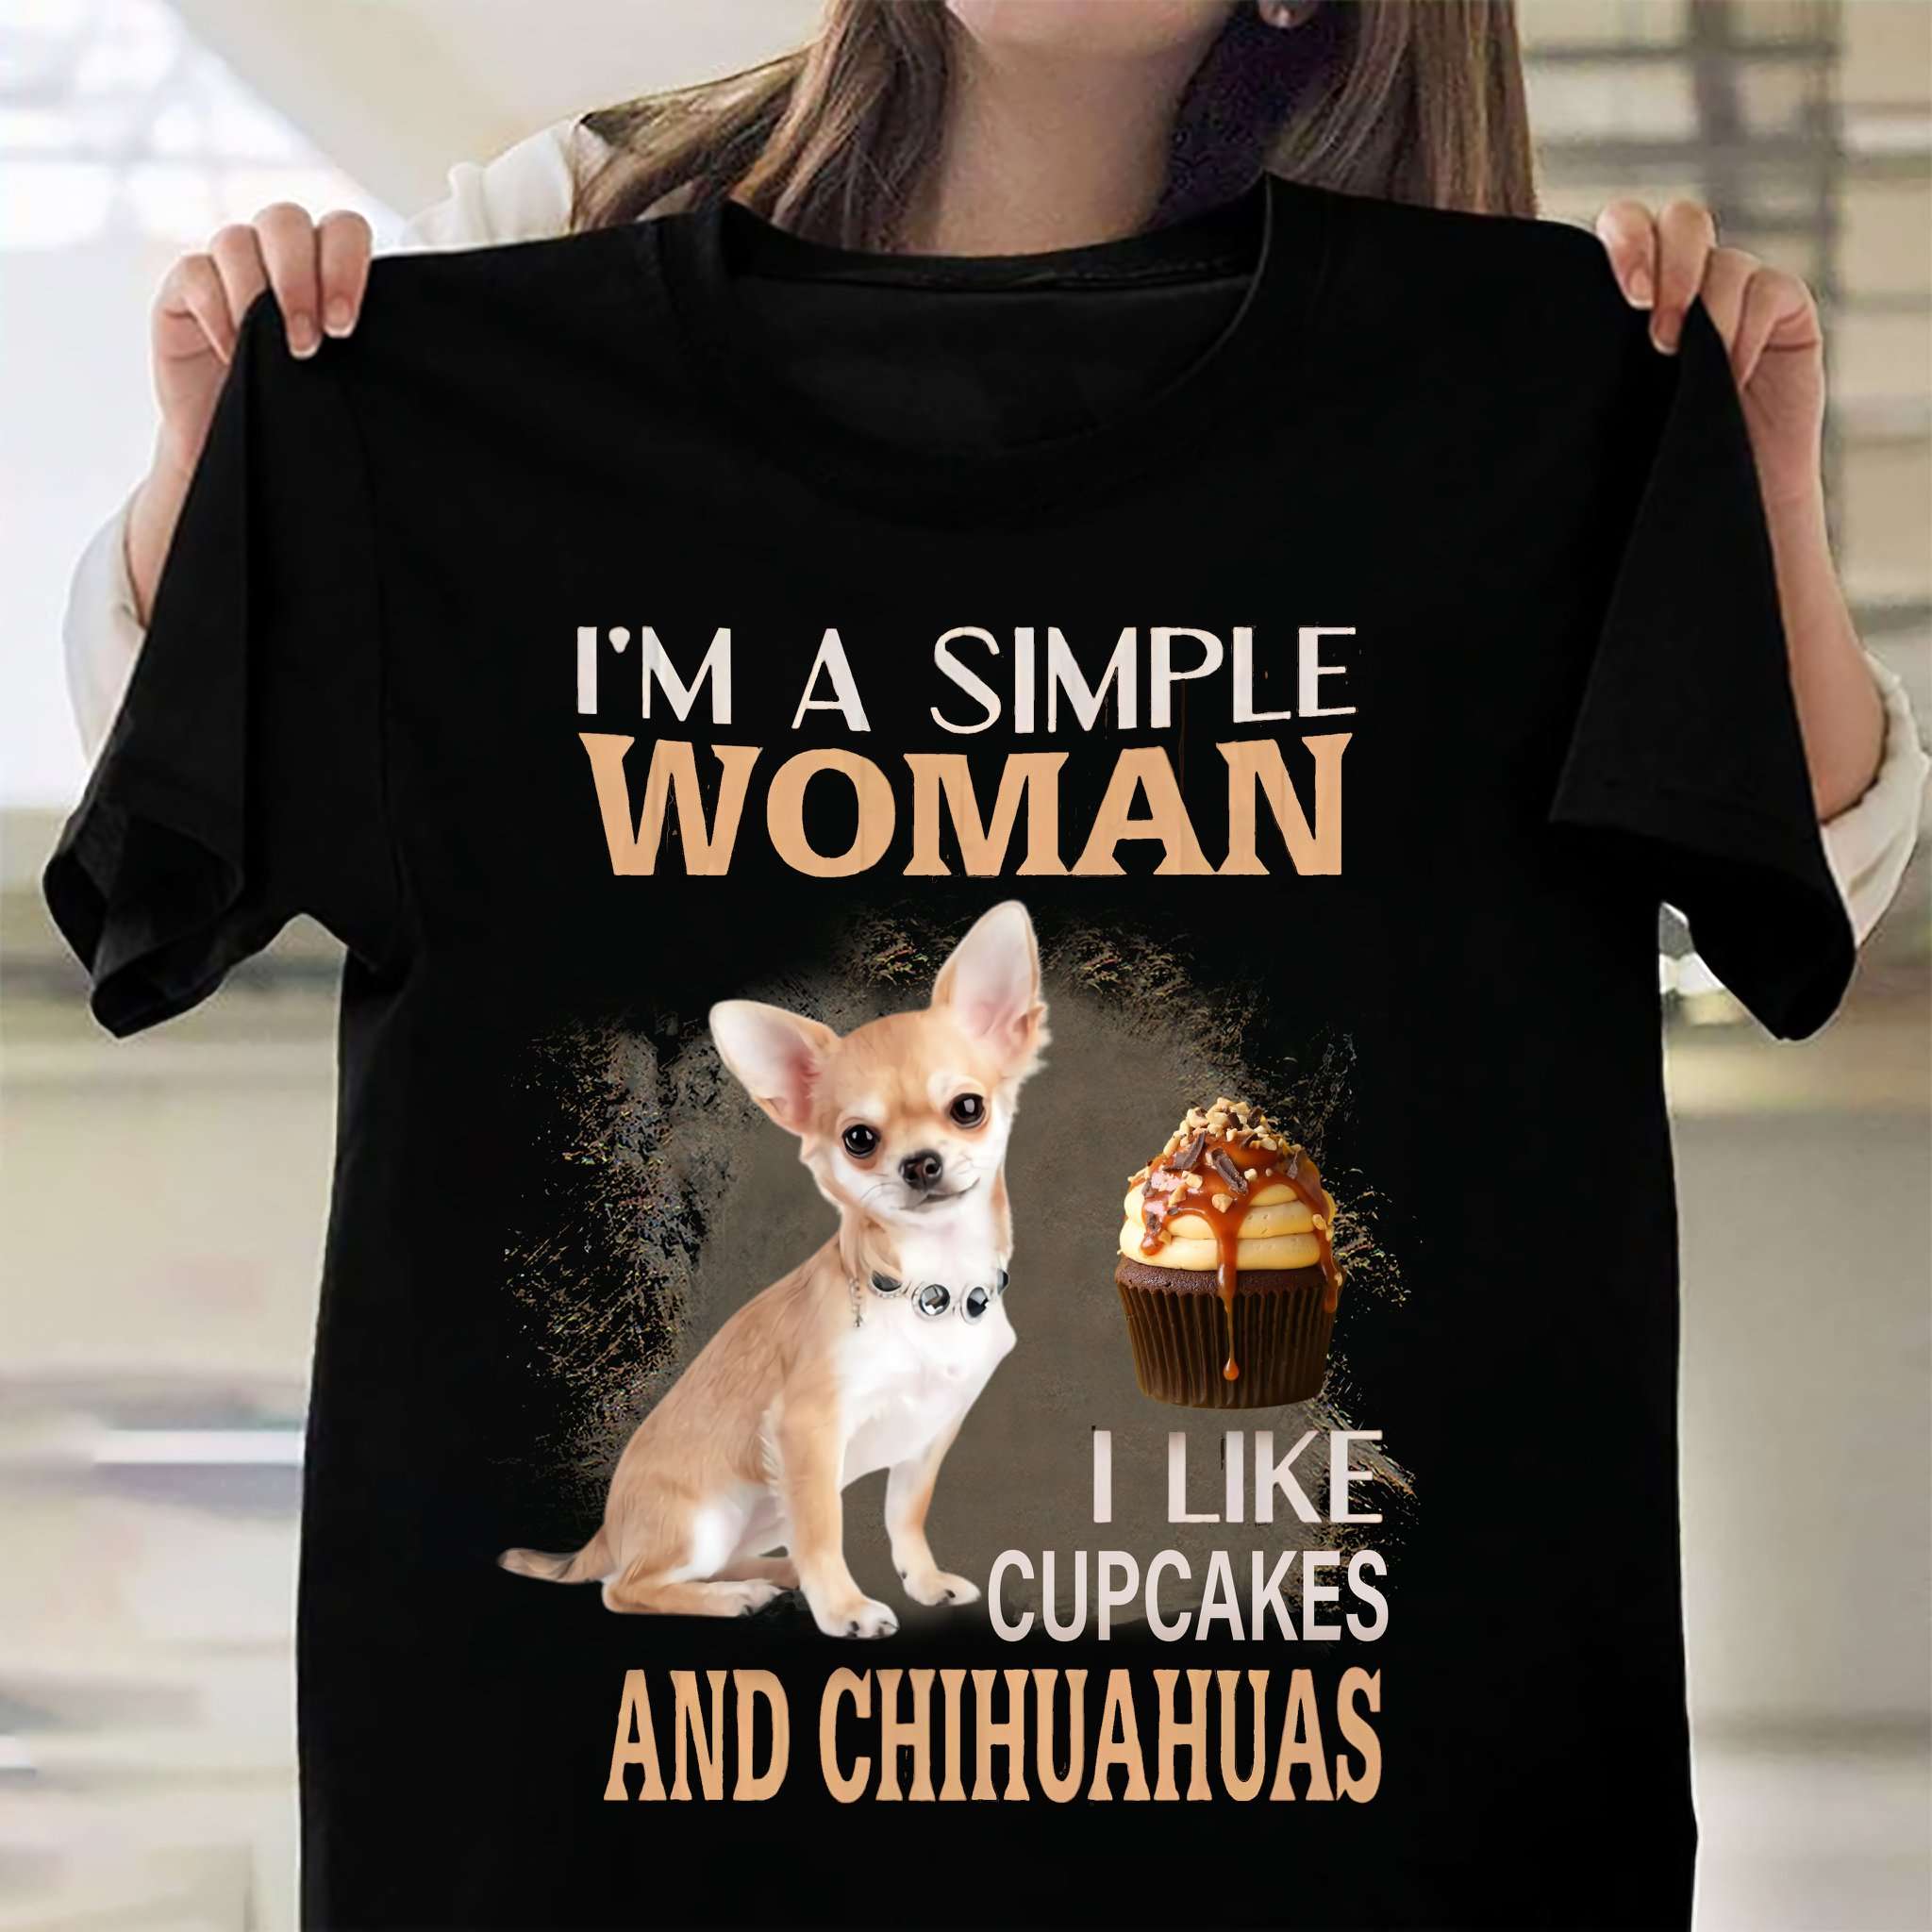 I'm a simple woman I like cupcakes and Chihuahuas